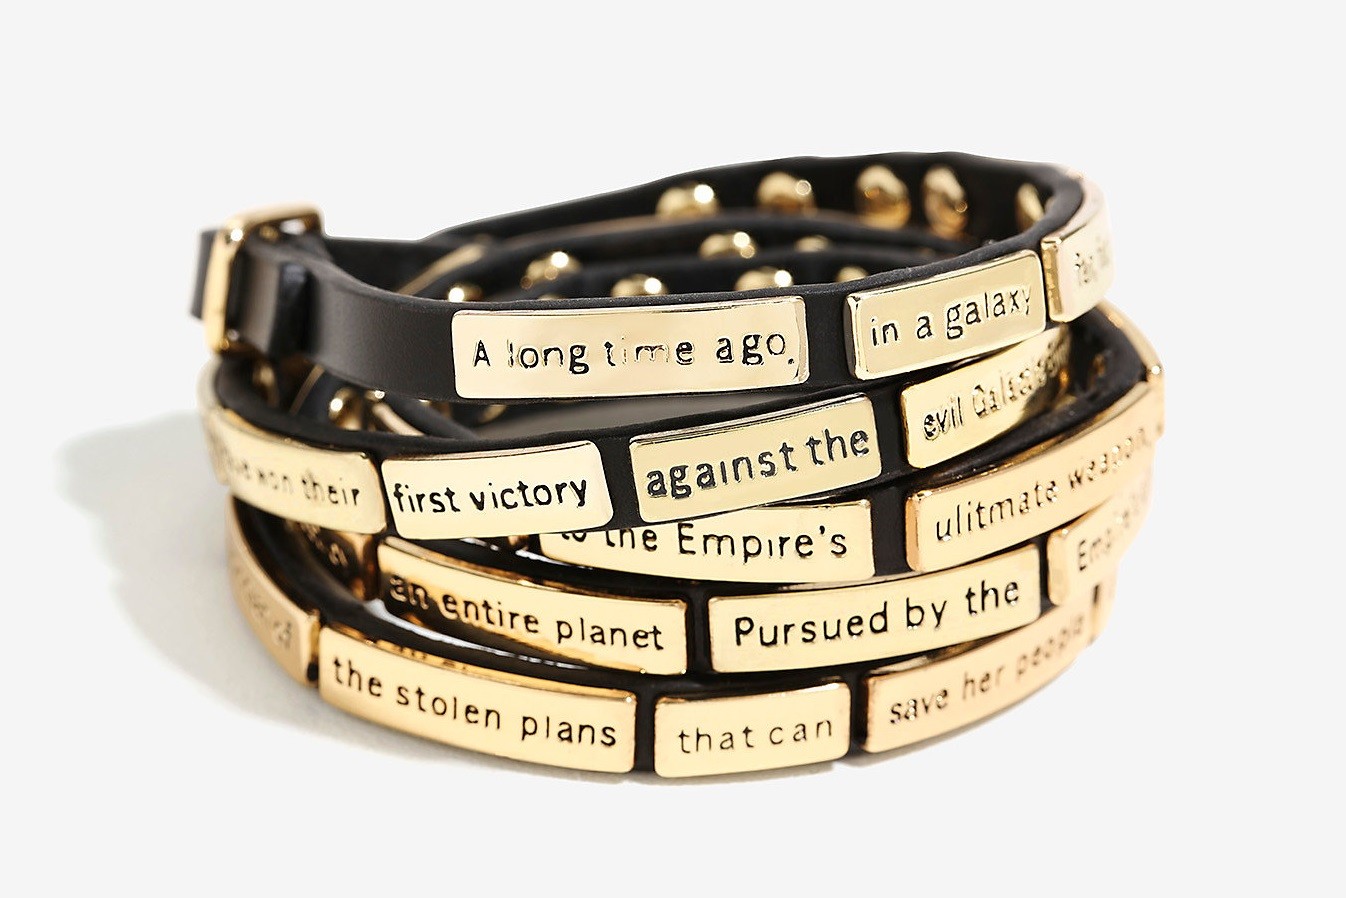 Star Wars wrap bracelet at Box Lunch